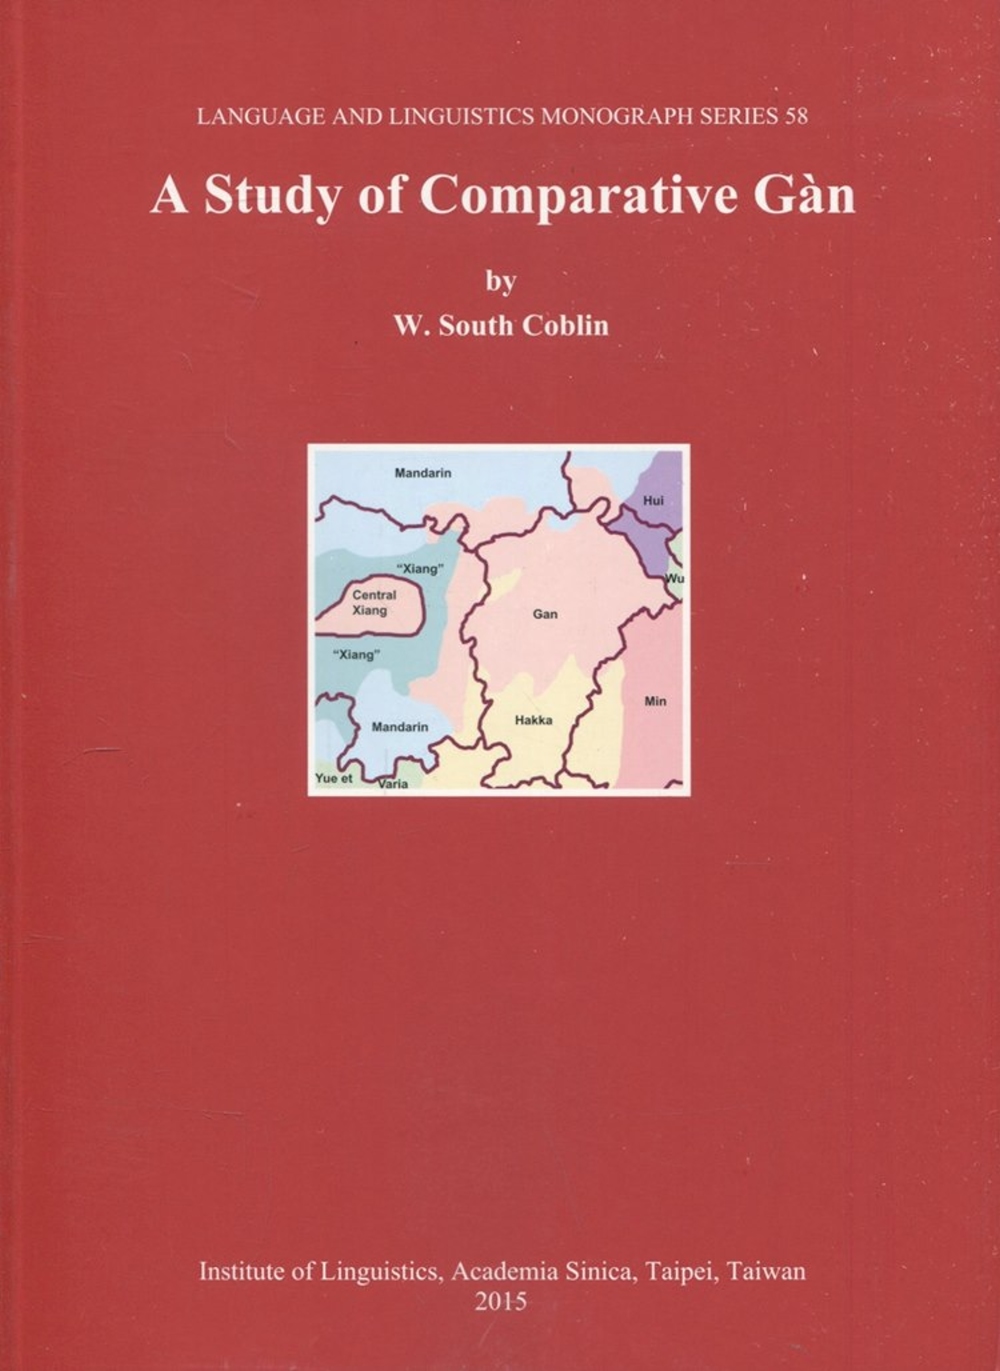 A Study of Comparative Gan